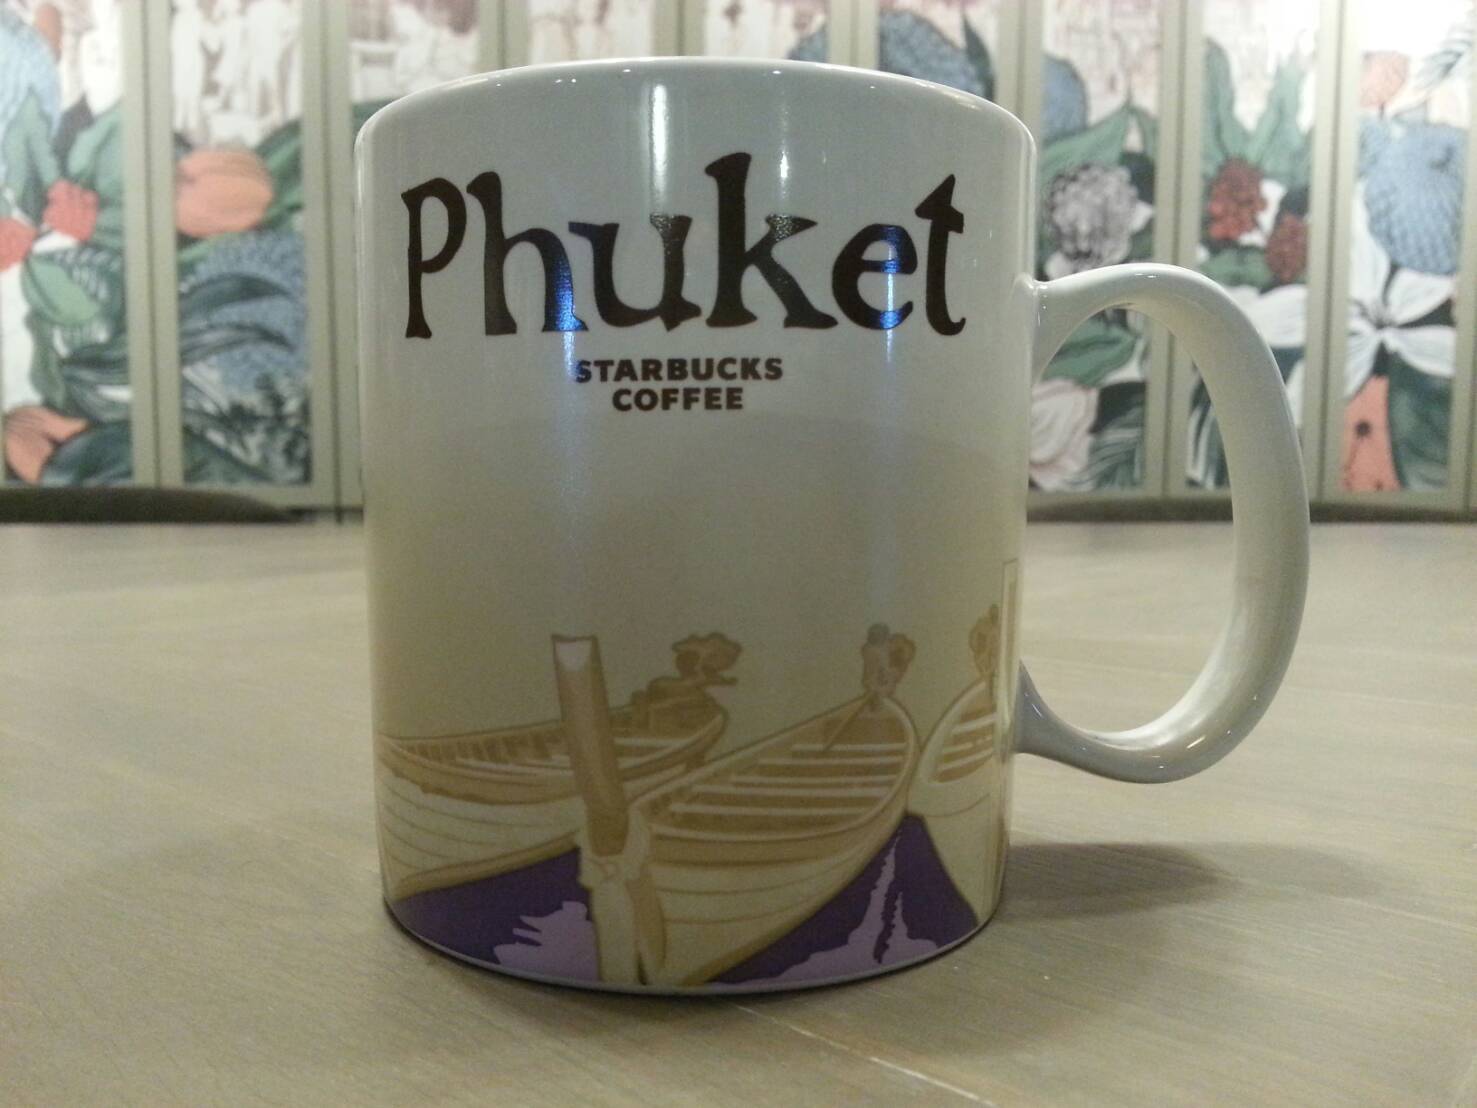 New Starbucks Coffee Global Icon Collectors Series City Phuket Thailand Mug Cup.